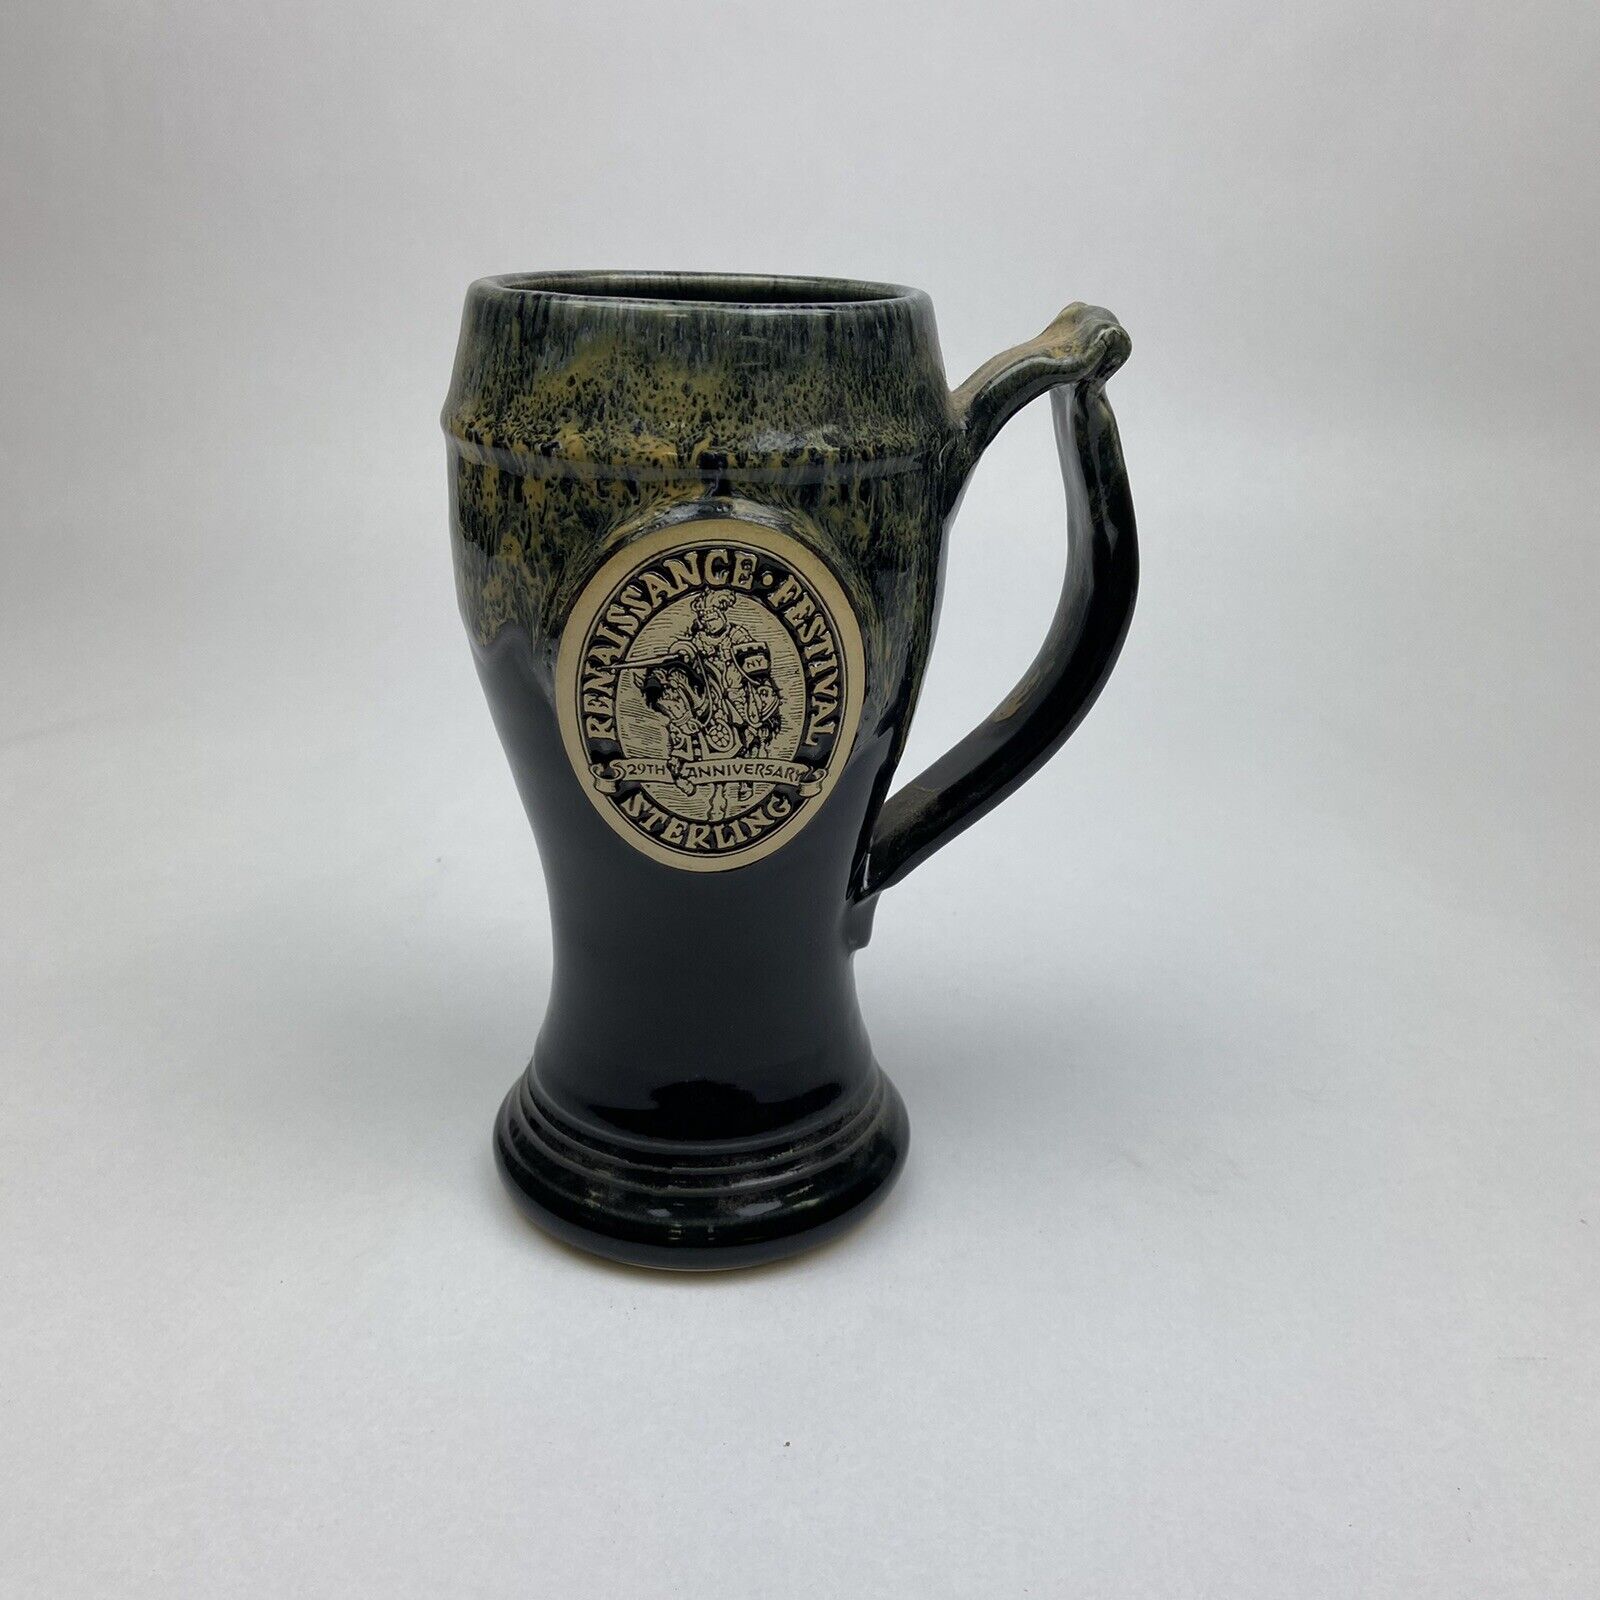 29th Sterling NY Renaissance Festival Handmade Pottery Cup Mug Limited Ed